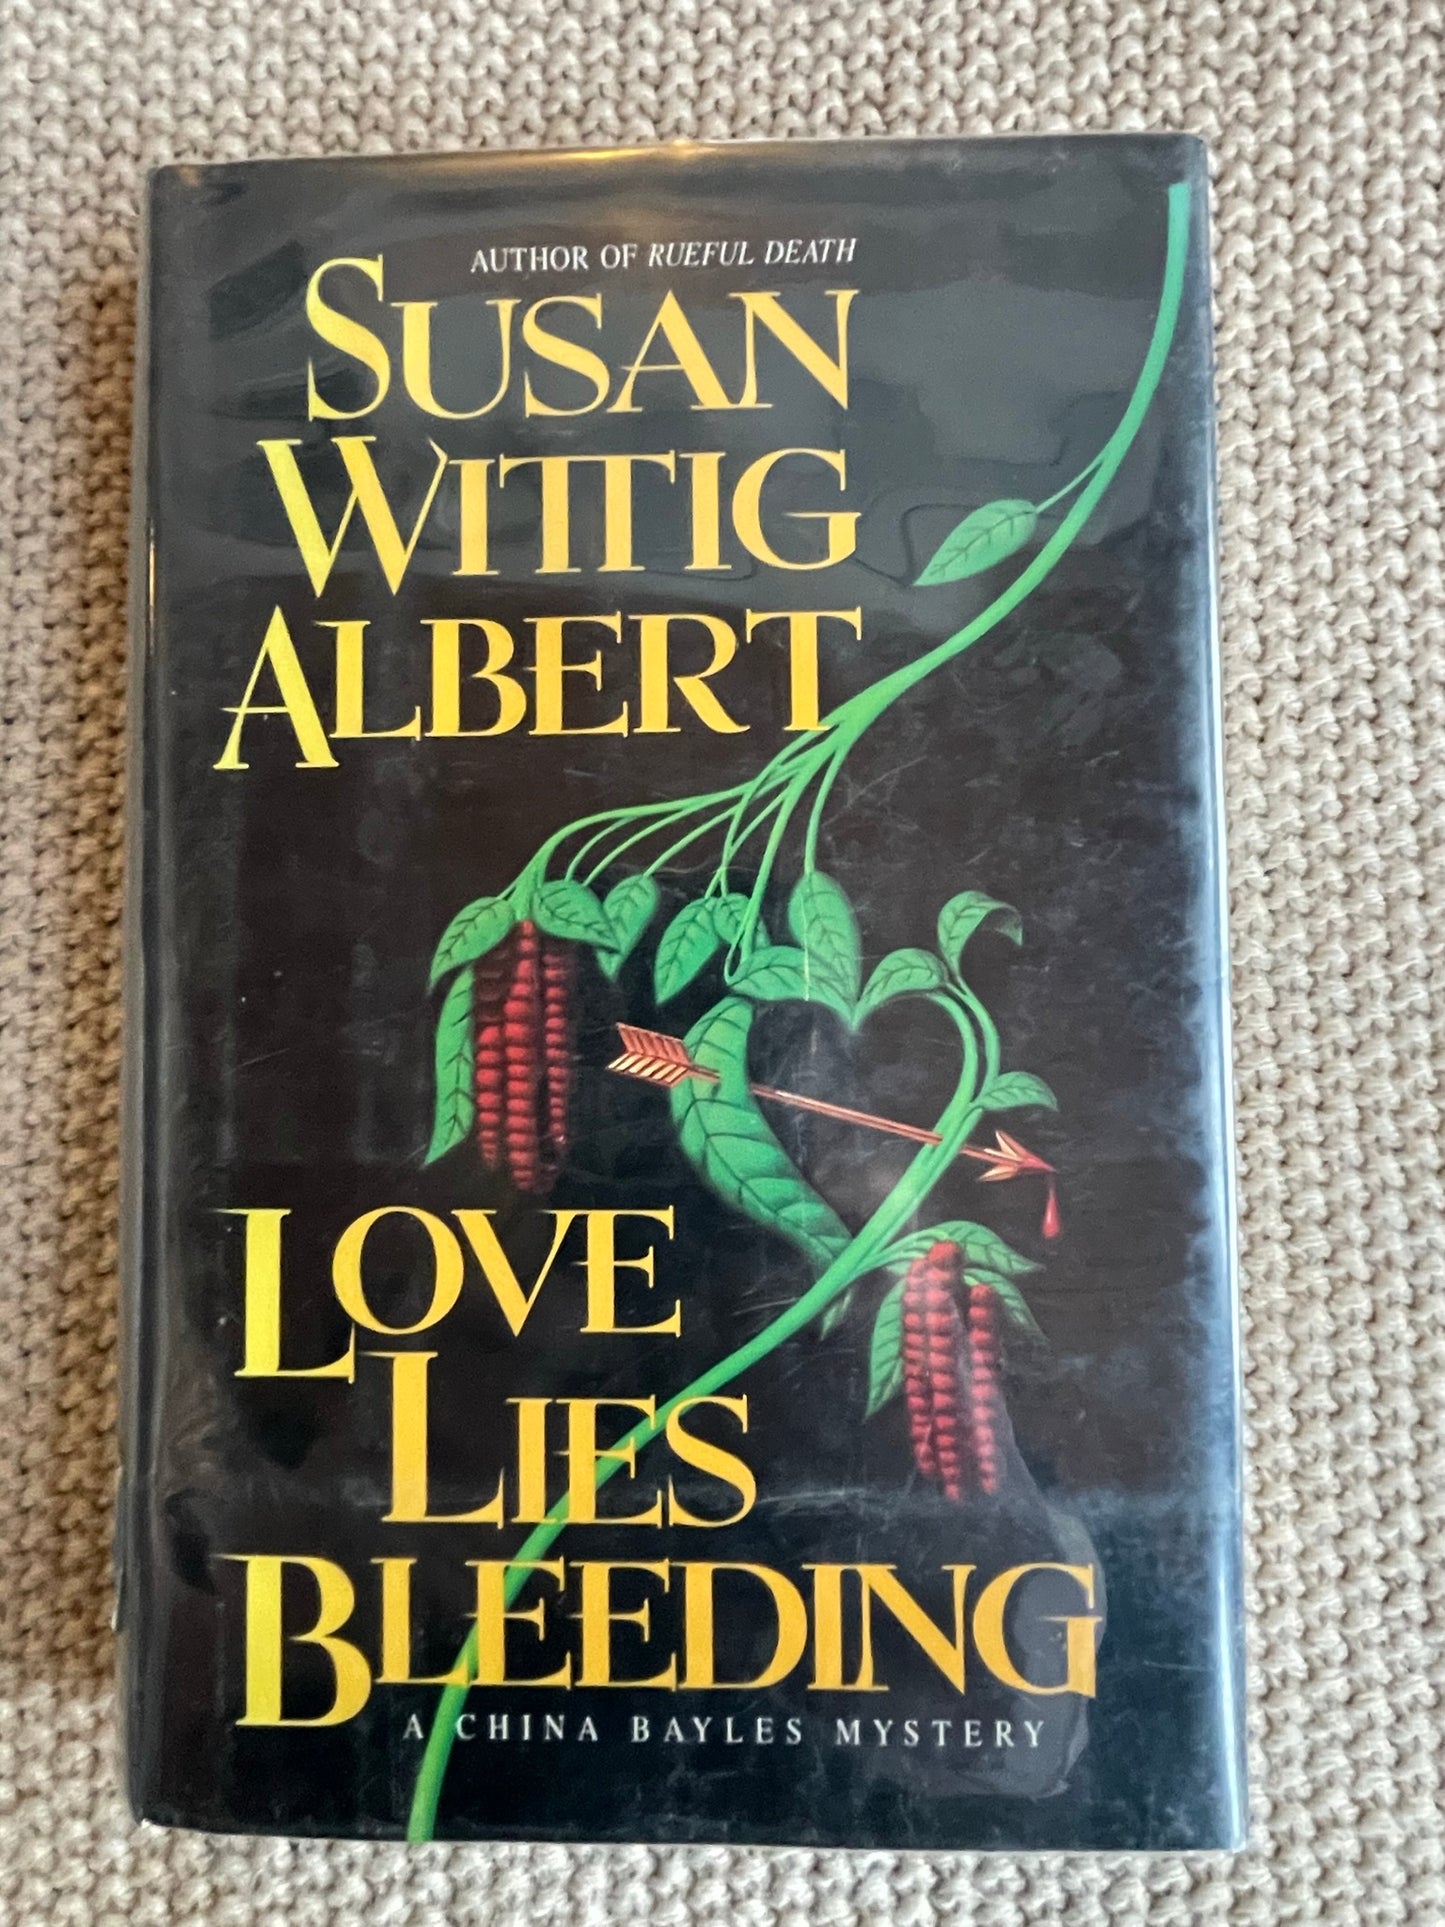 Wittig Albert, Susan: Love Lies Bleeding - A China Bayles Mystery (First Edition, Nov. 1997)